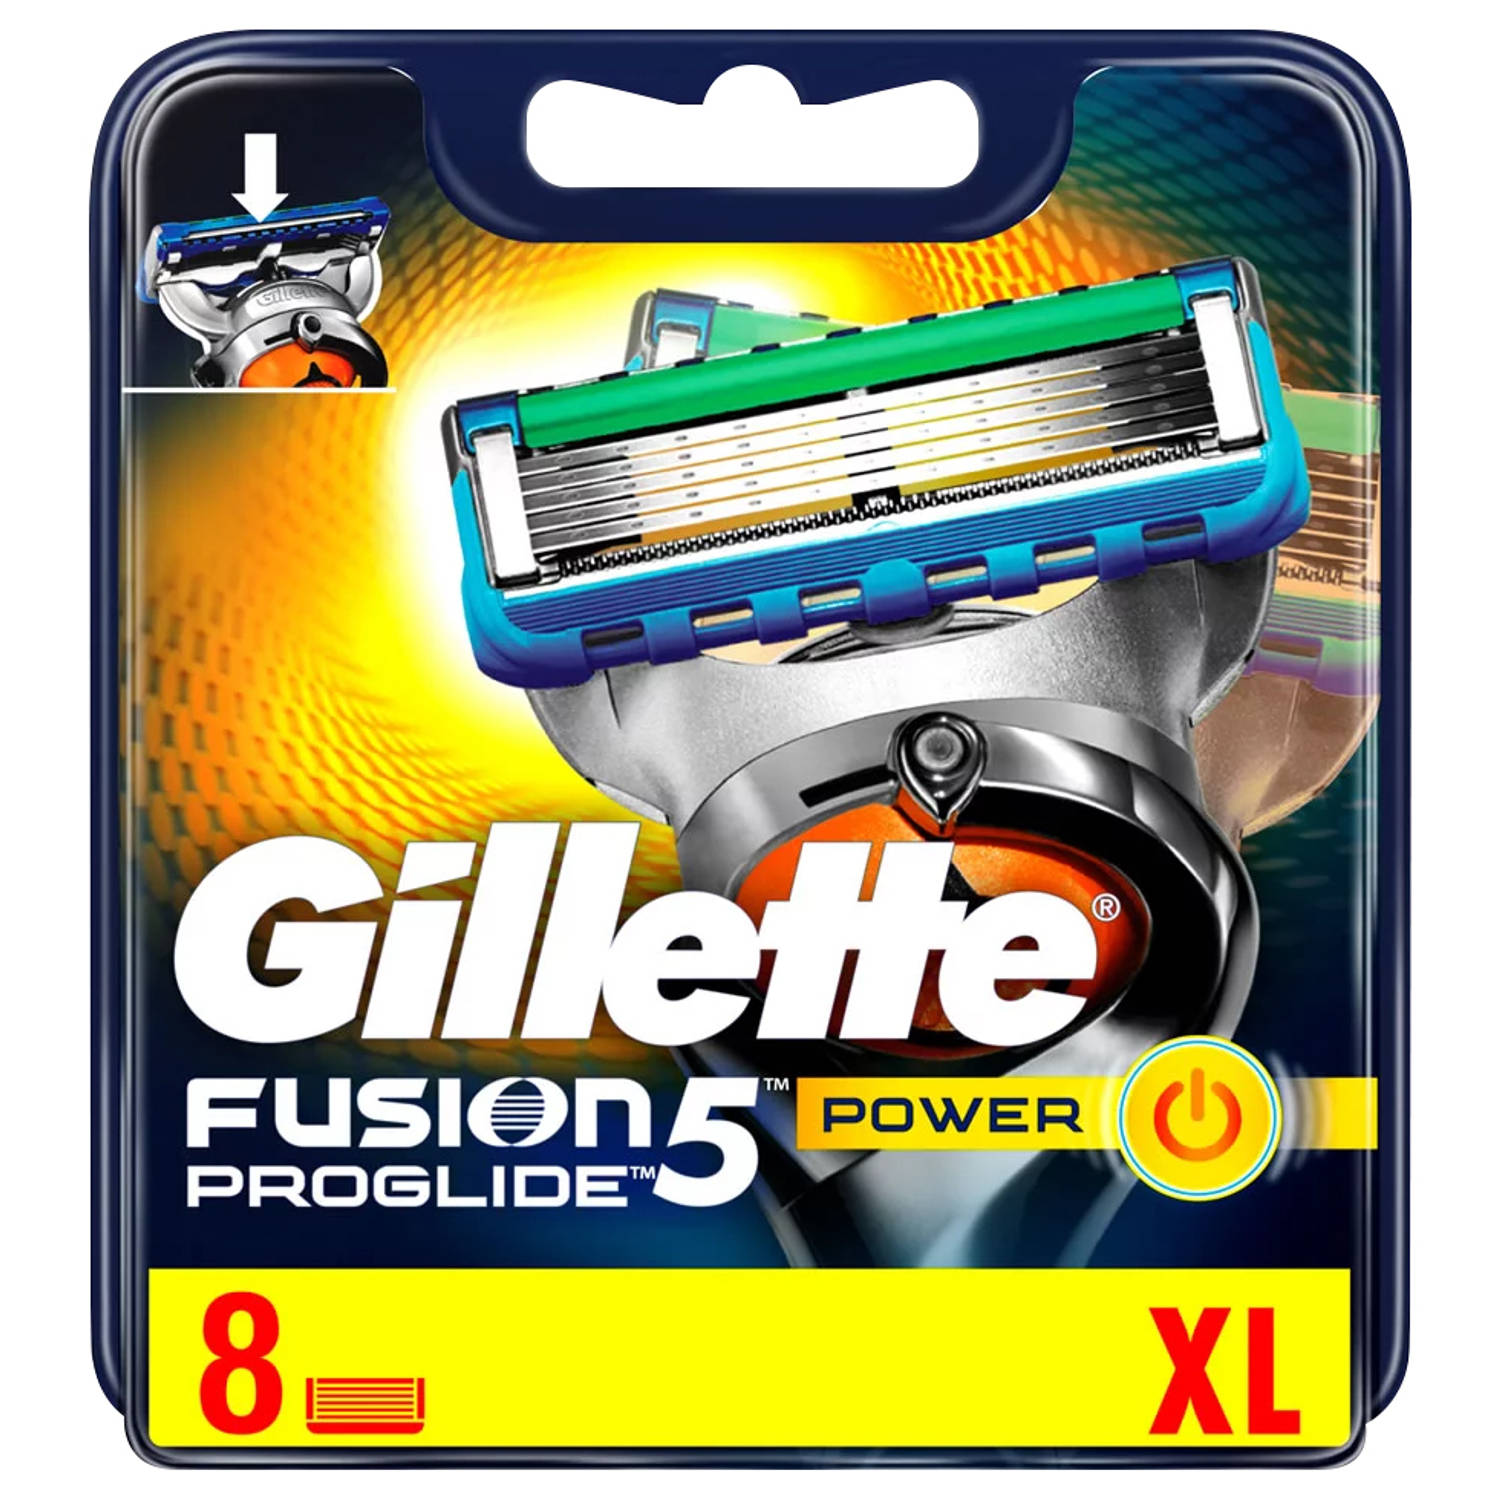 Gillette Fusion ProGlide Power scheermesjes - 8 stuks.